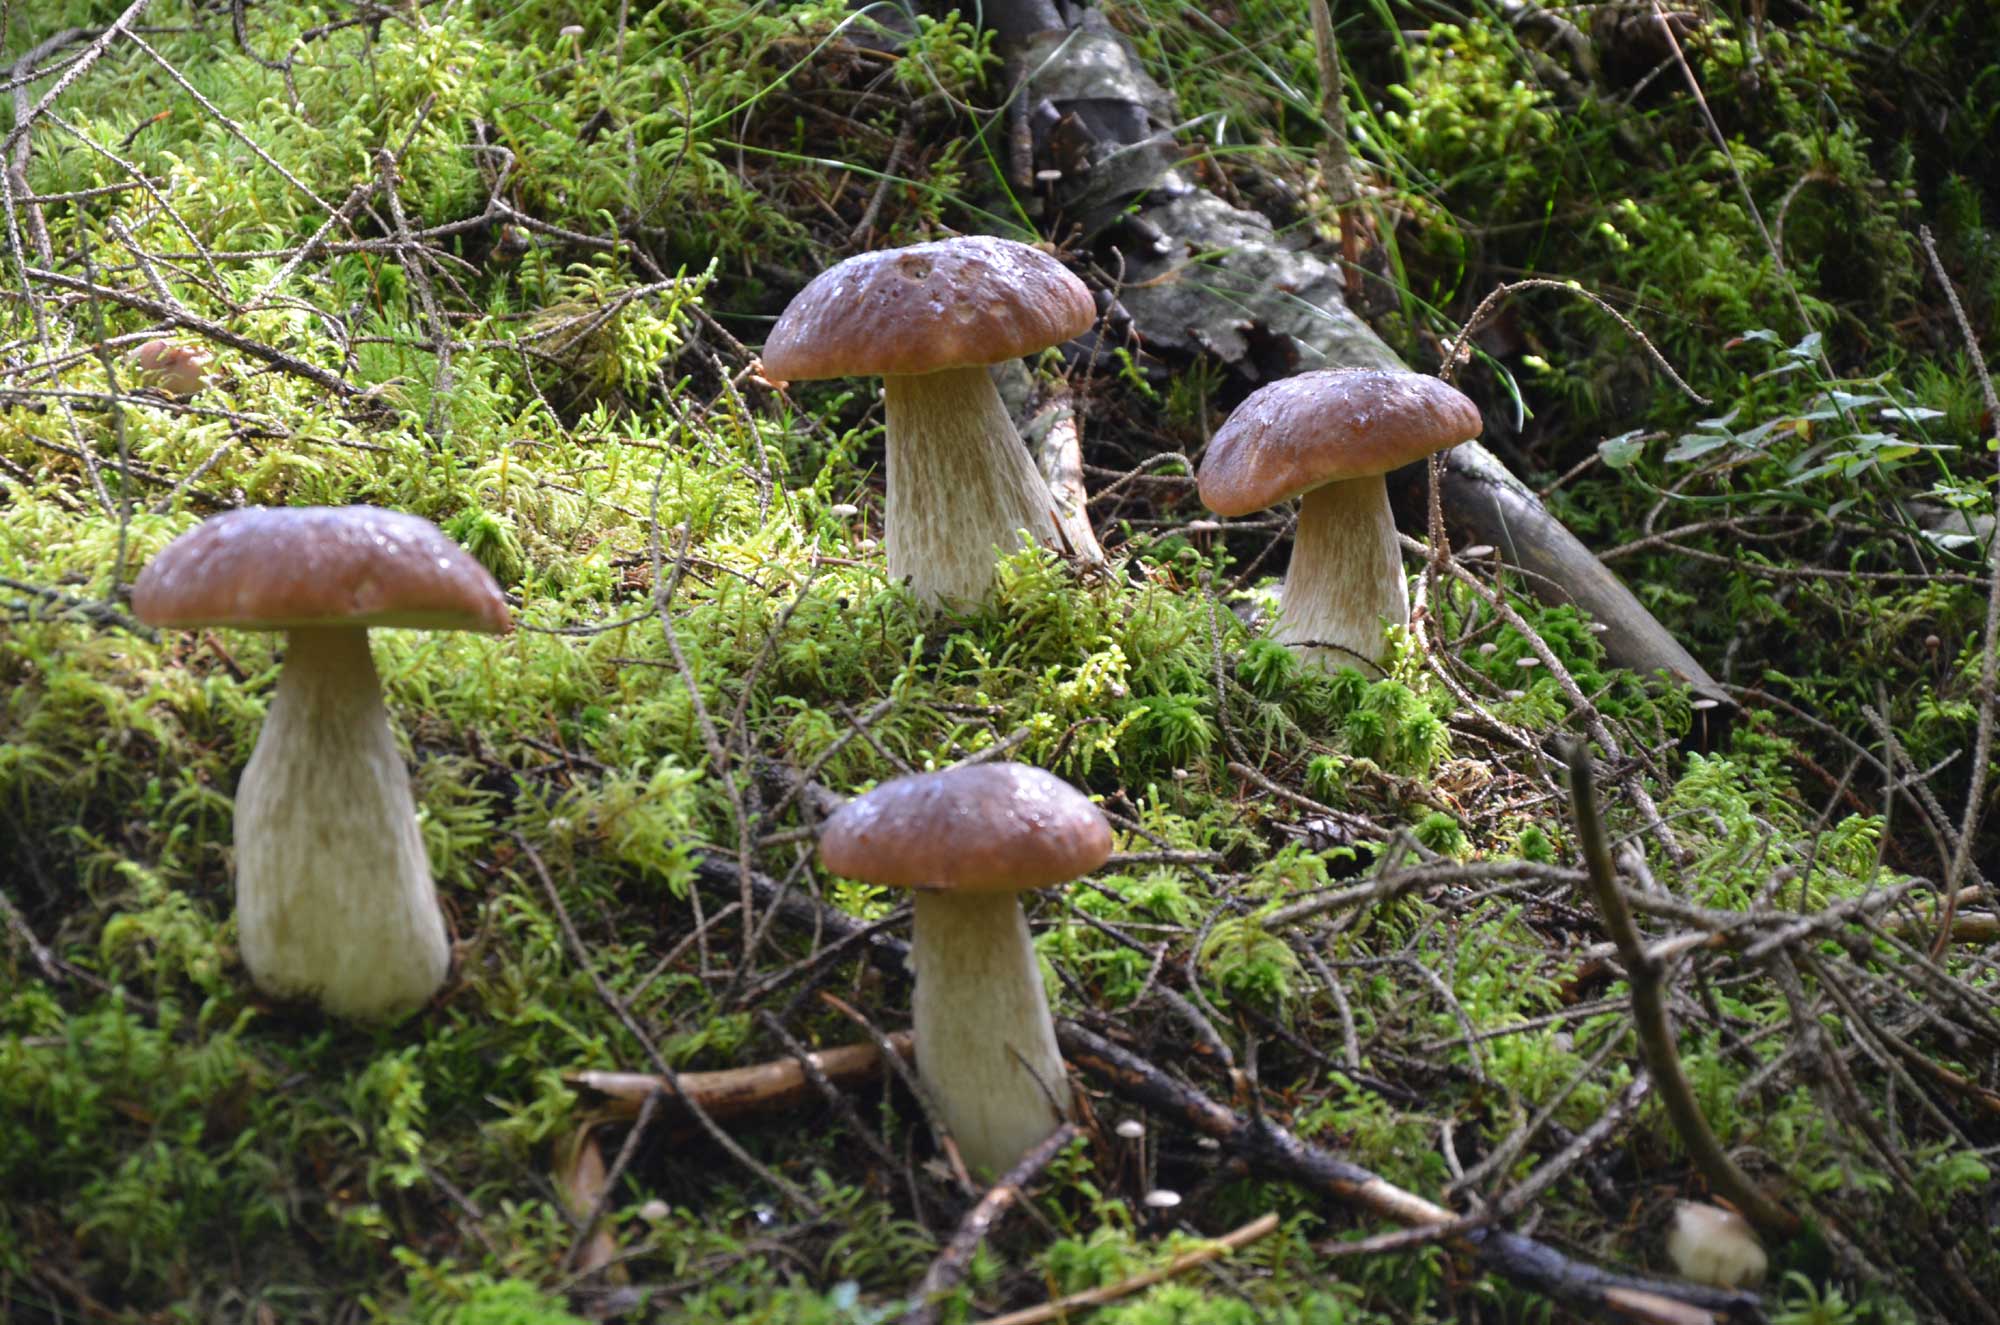 wild mushroom picking trees sweden moss